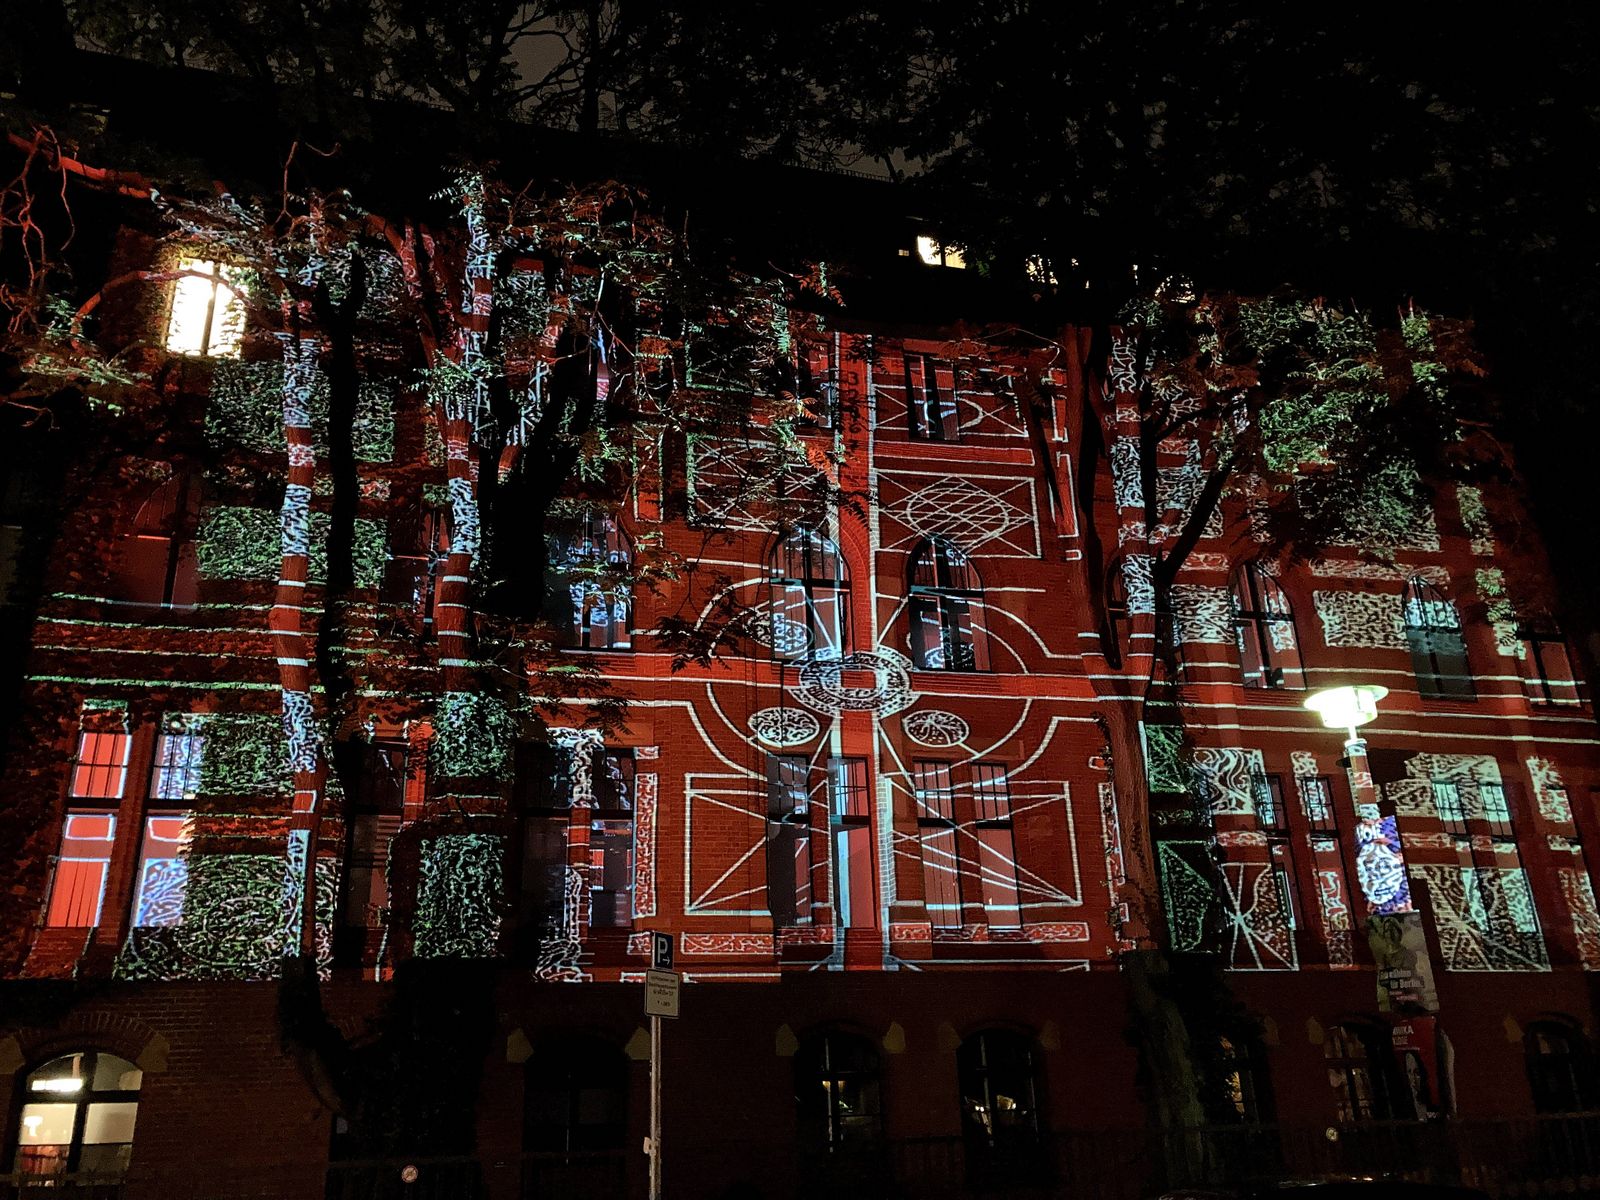 Festival of Lights, Projektion der Bilder aus dem Offenen Atelier auf die Fassade des St. Hedwig Krankenhauses, September 2021